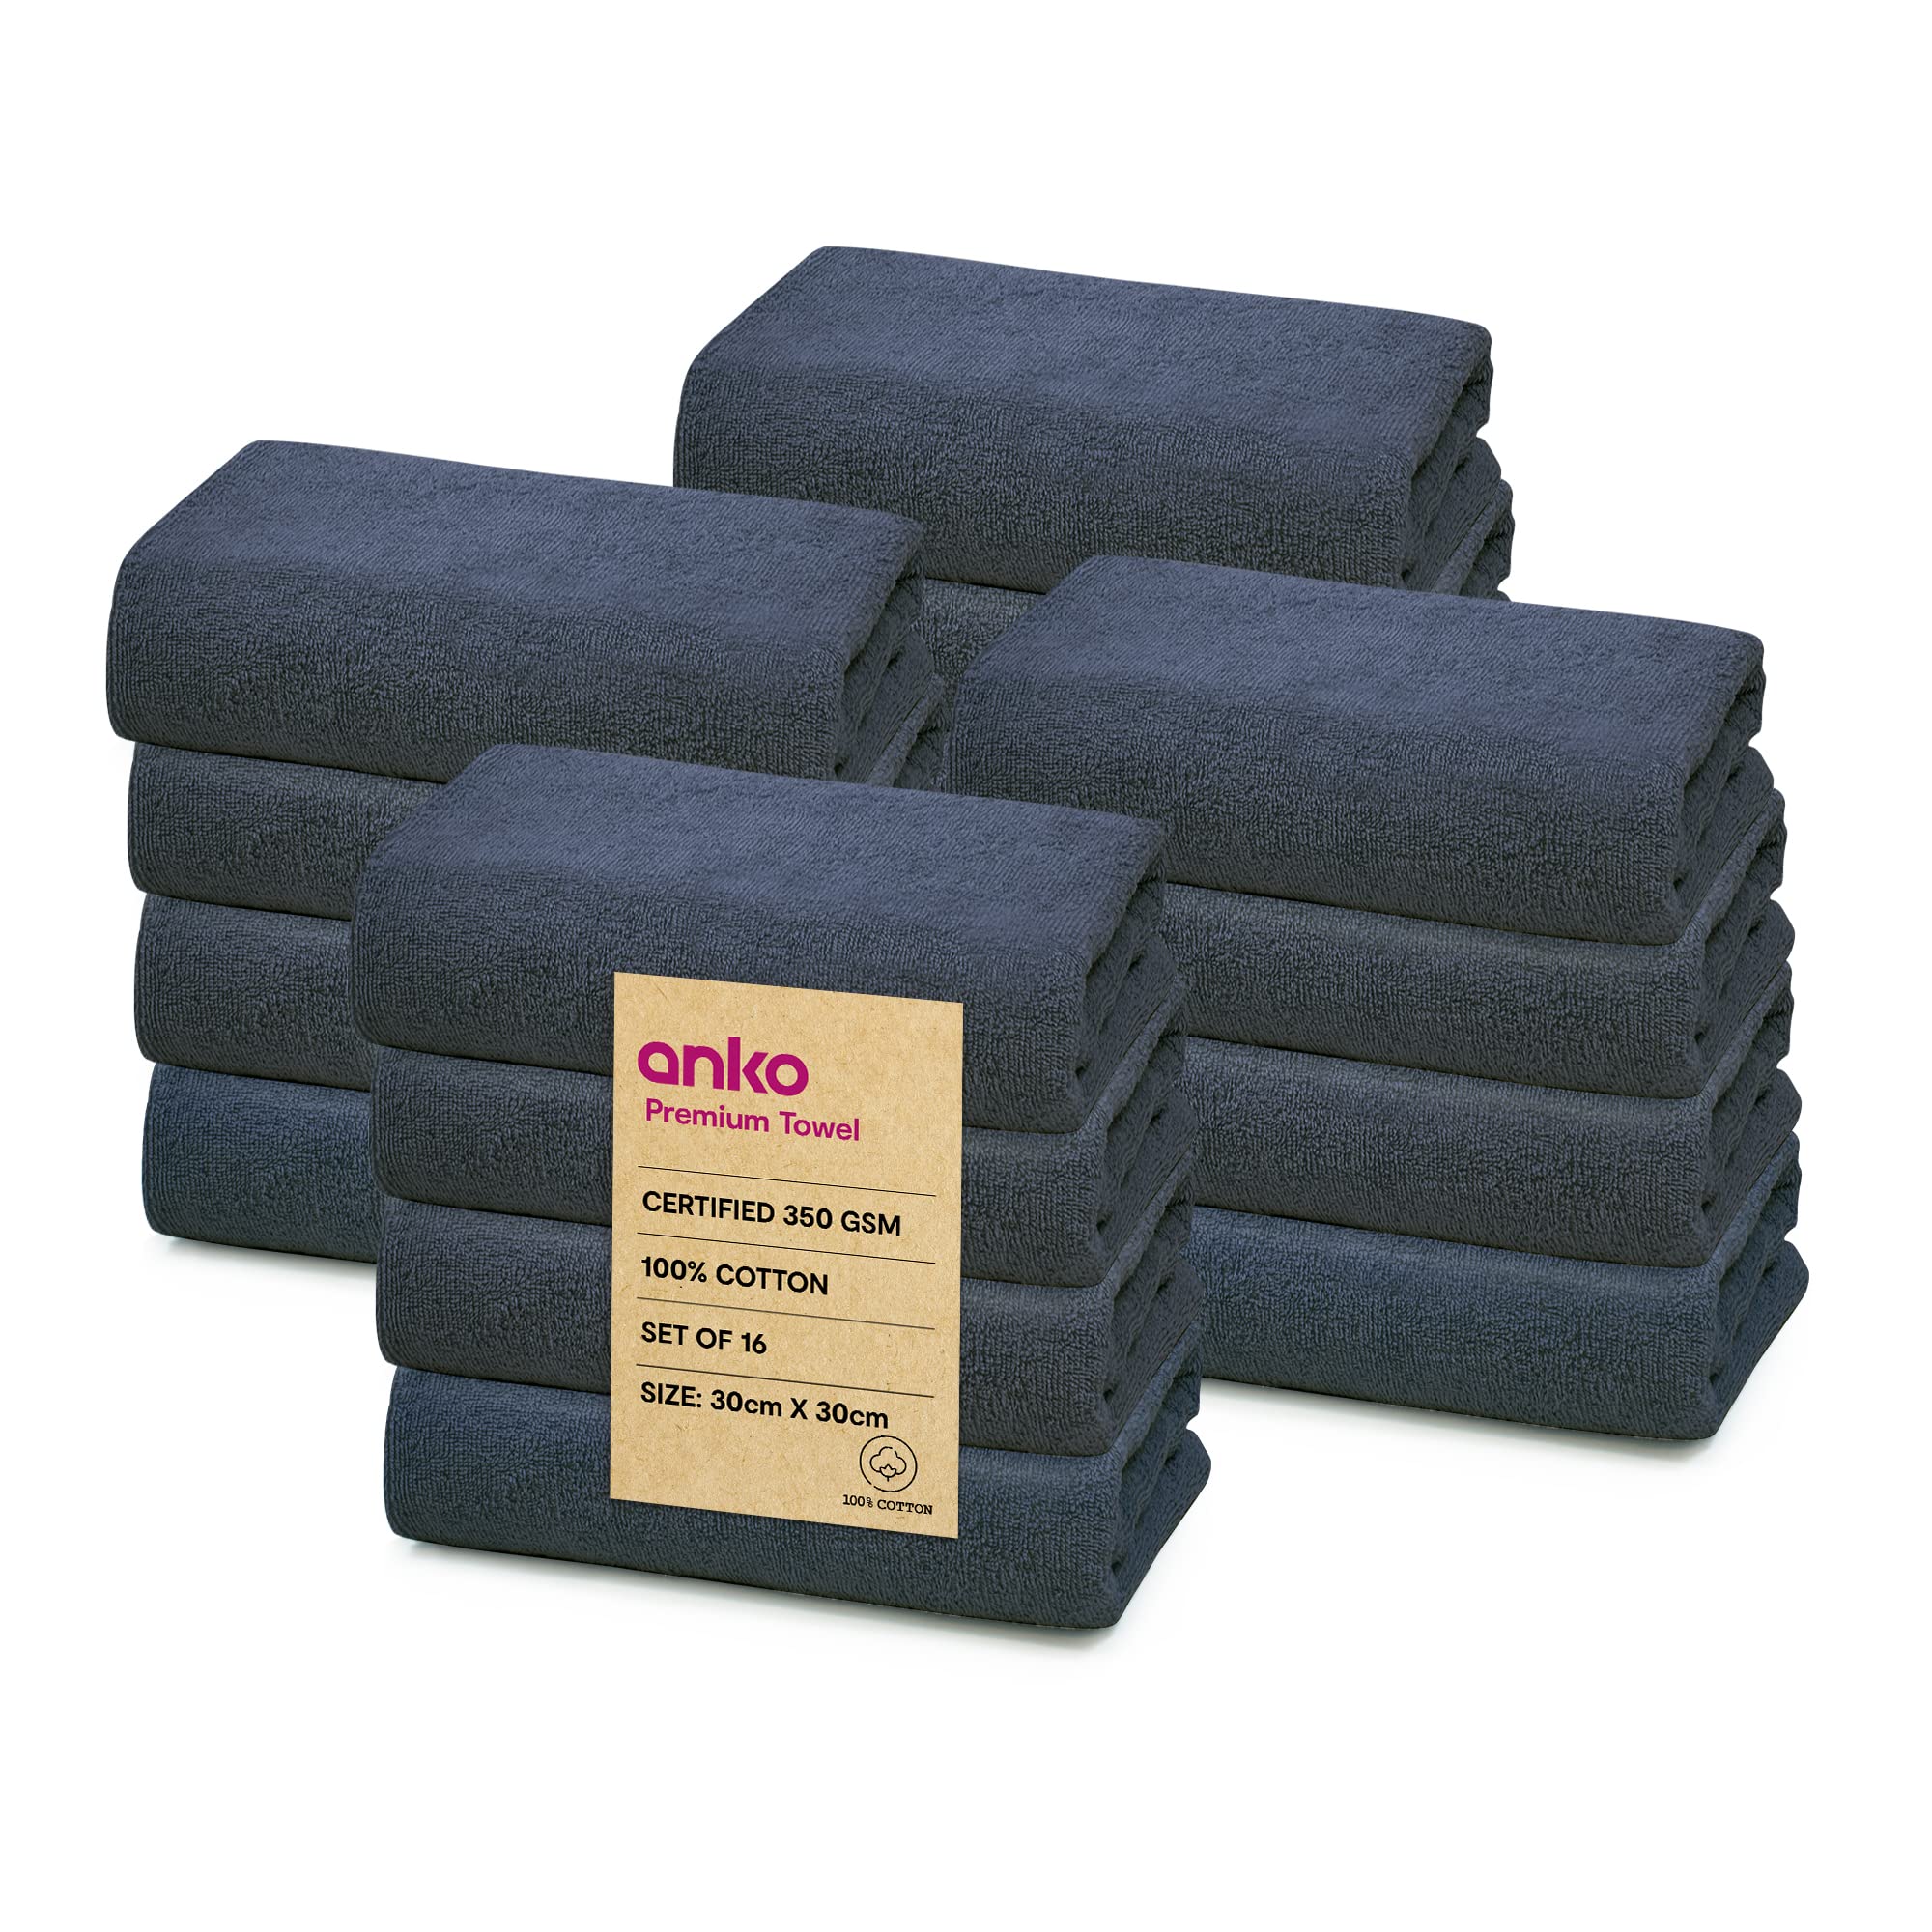 Anko Australia 100% Cotton 350 GSM Madison Face Towel | Set of 16 | Super-Soft, Absorbent, Quick-Drying | Ocean Blue Towel for Men, Women & Kids | 30x30 cm |Travel, Gym, Spa Towel